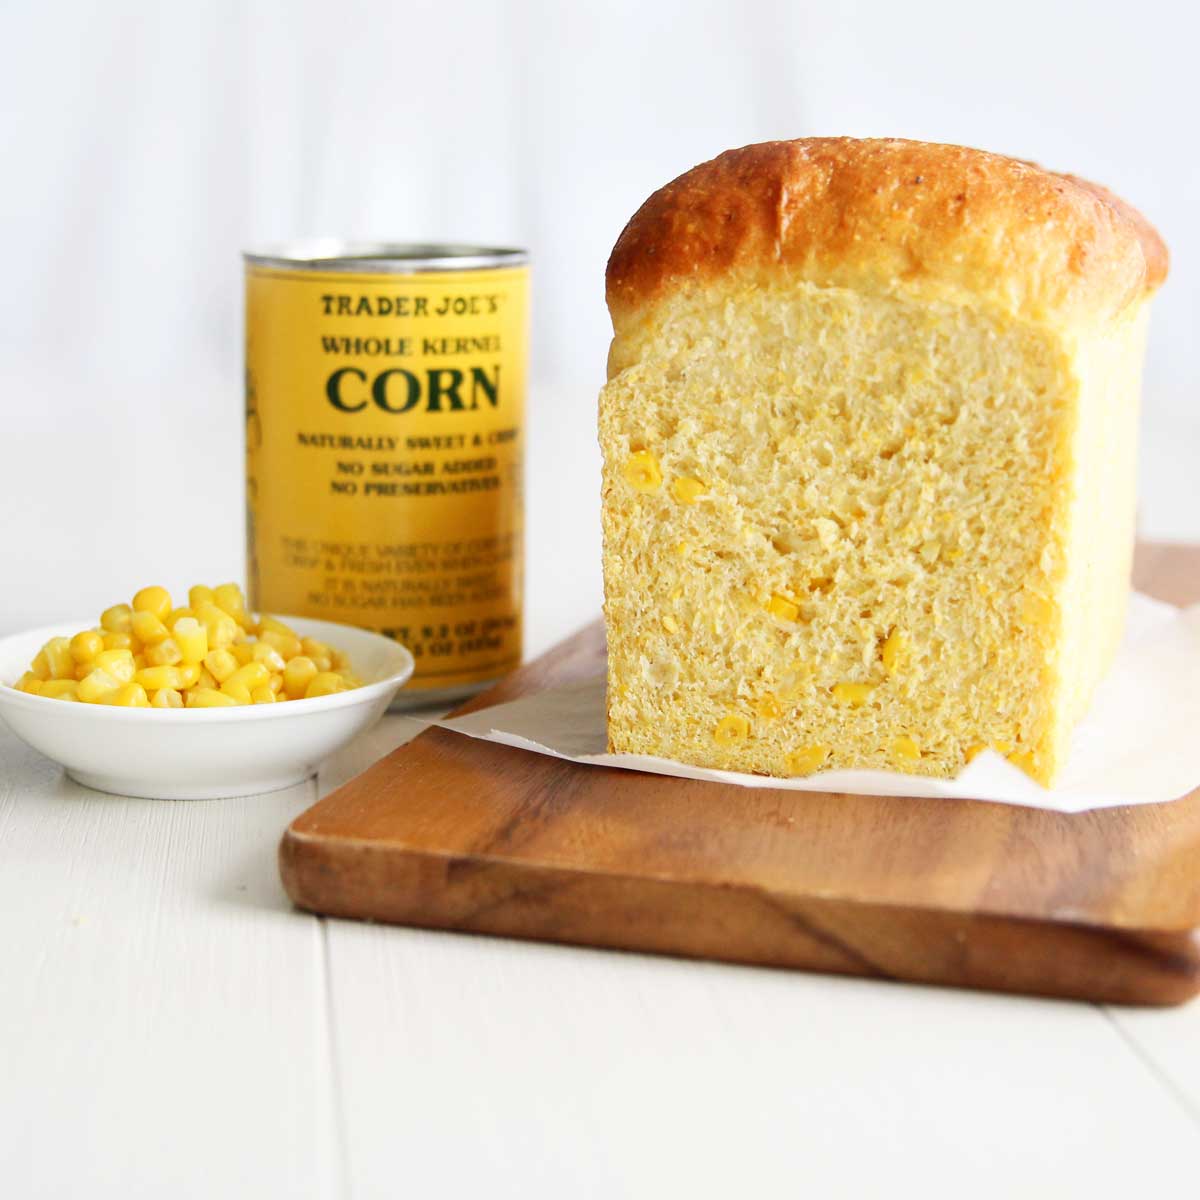 Creamed Corn Dinner Rolls: Easy 4-ingredient Recipe made with Canned Creamed Corn - Creamed Corn Dinner Rolls